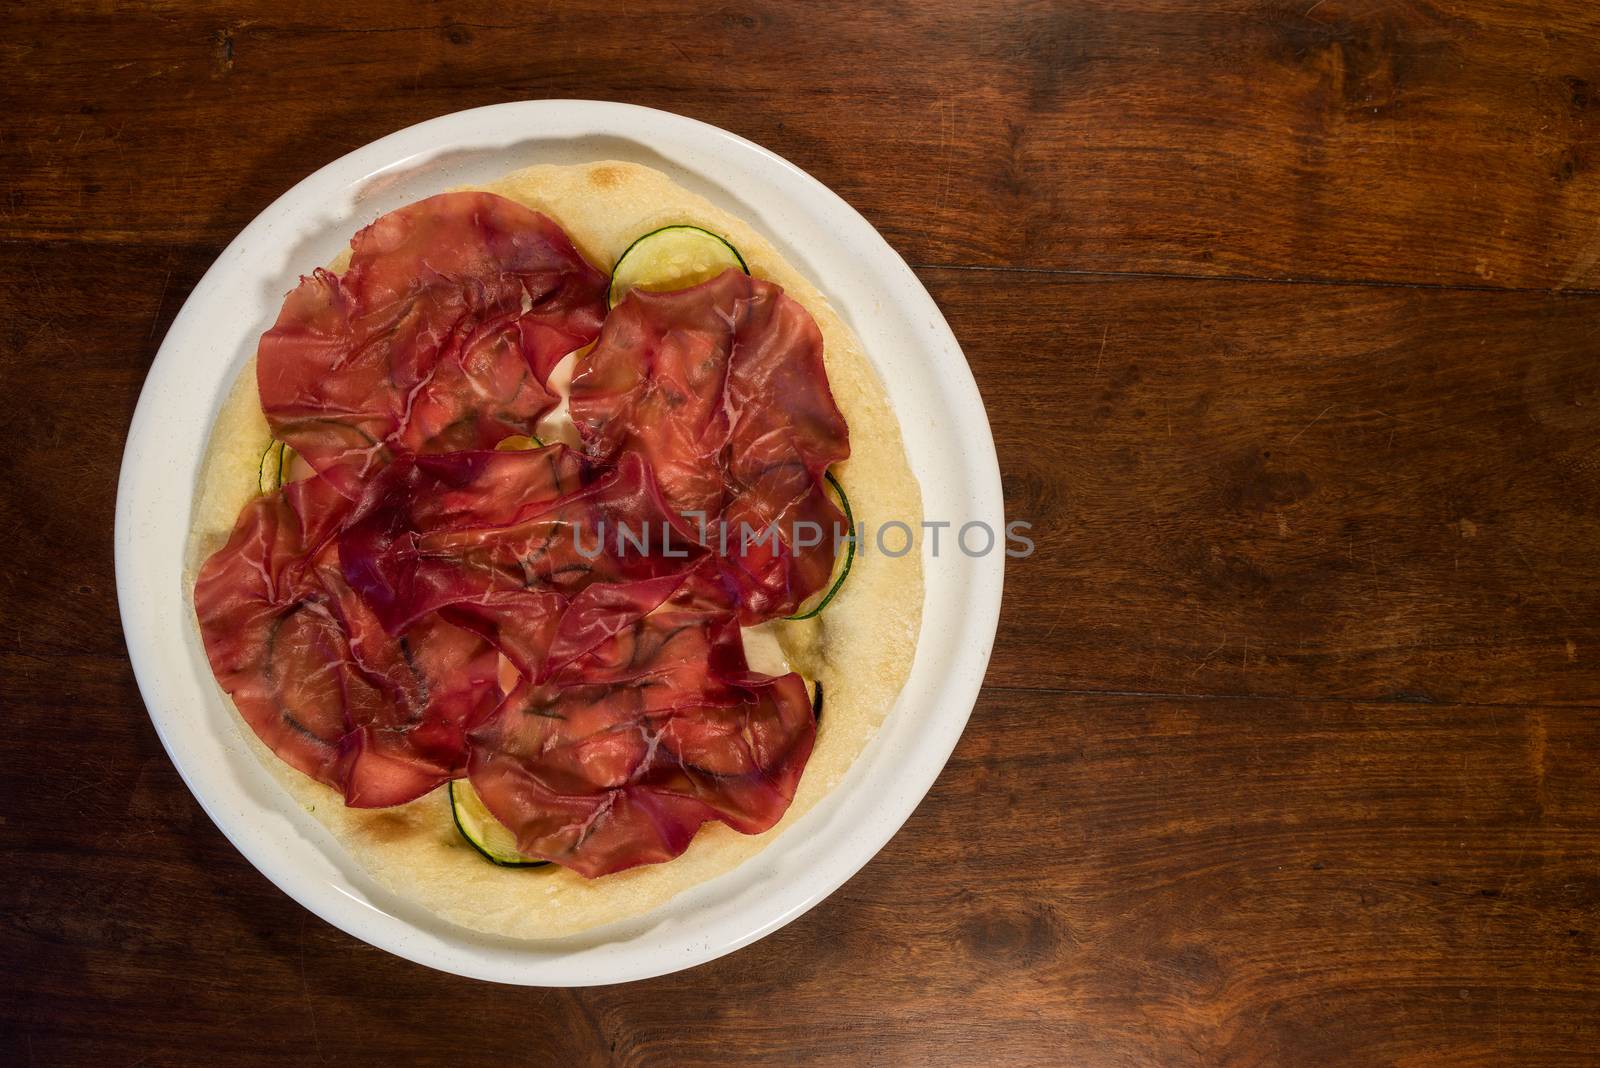 Italian pizza with bresaola, zucchini and eggplant by LuigiMorbidelli